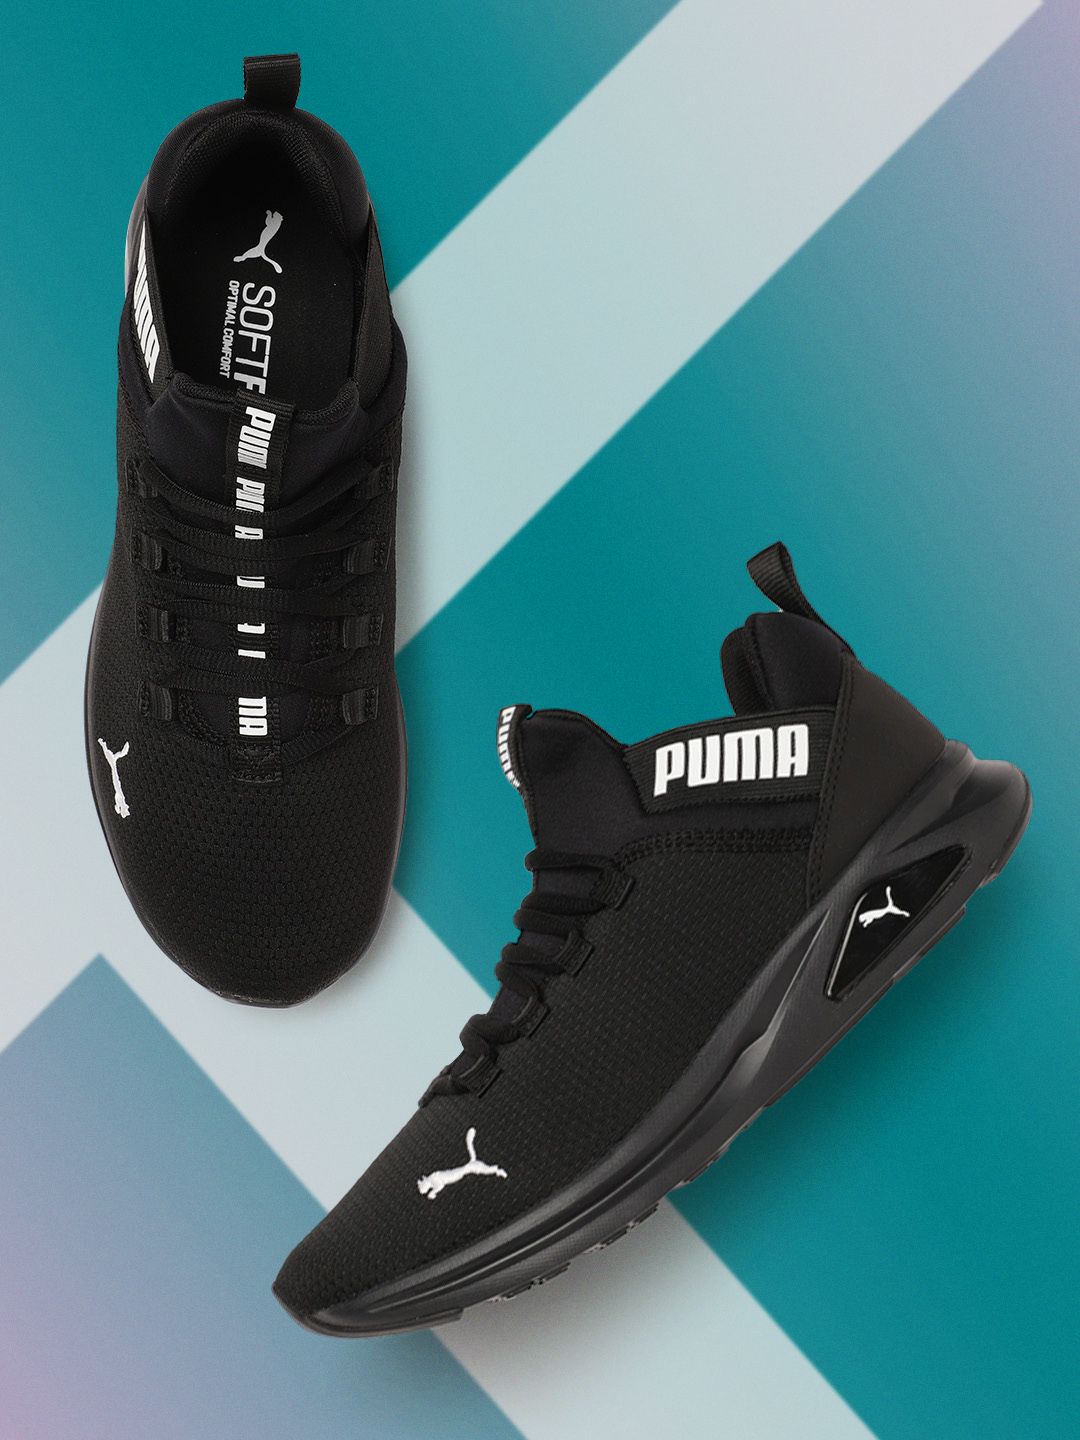 Puma Unisex Black Textile Running Non-Marking Shoes Price in India